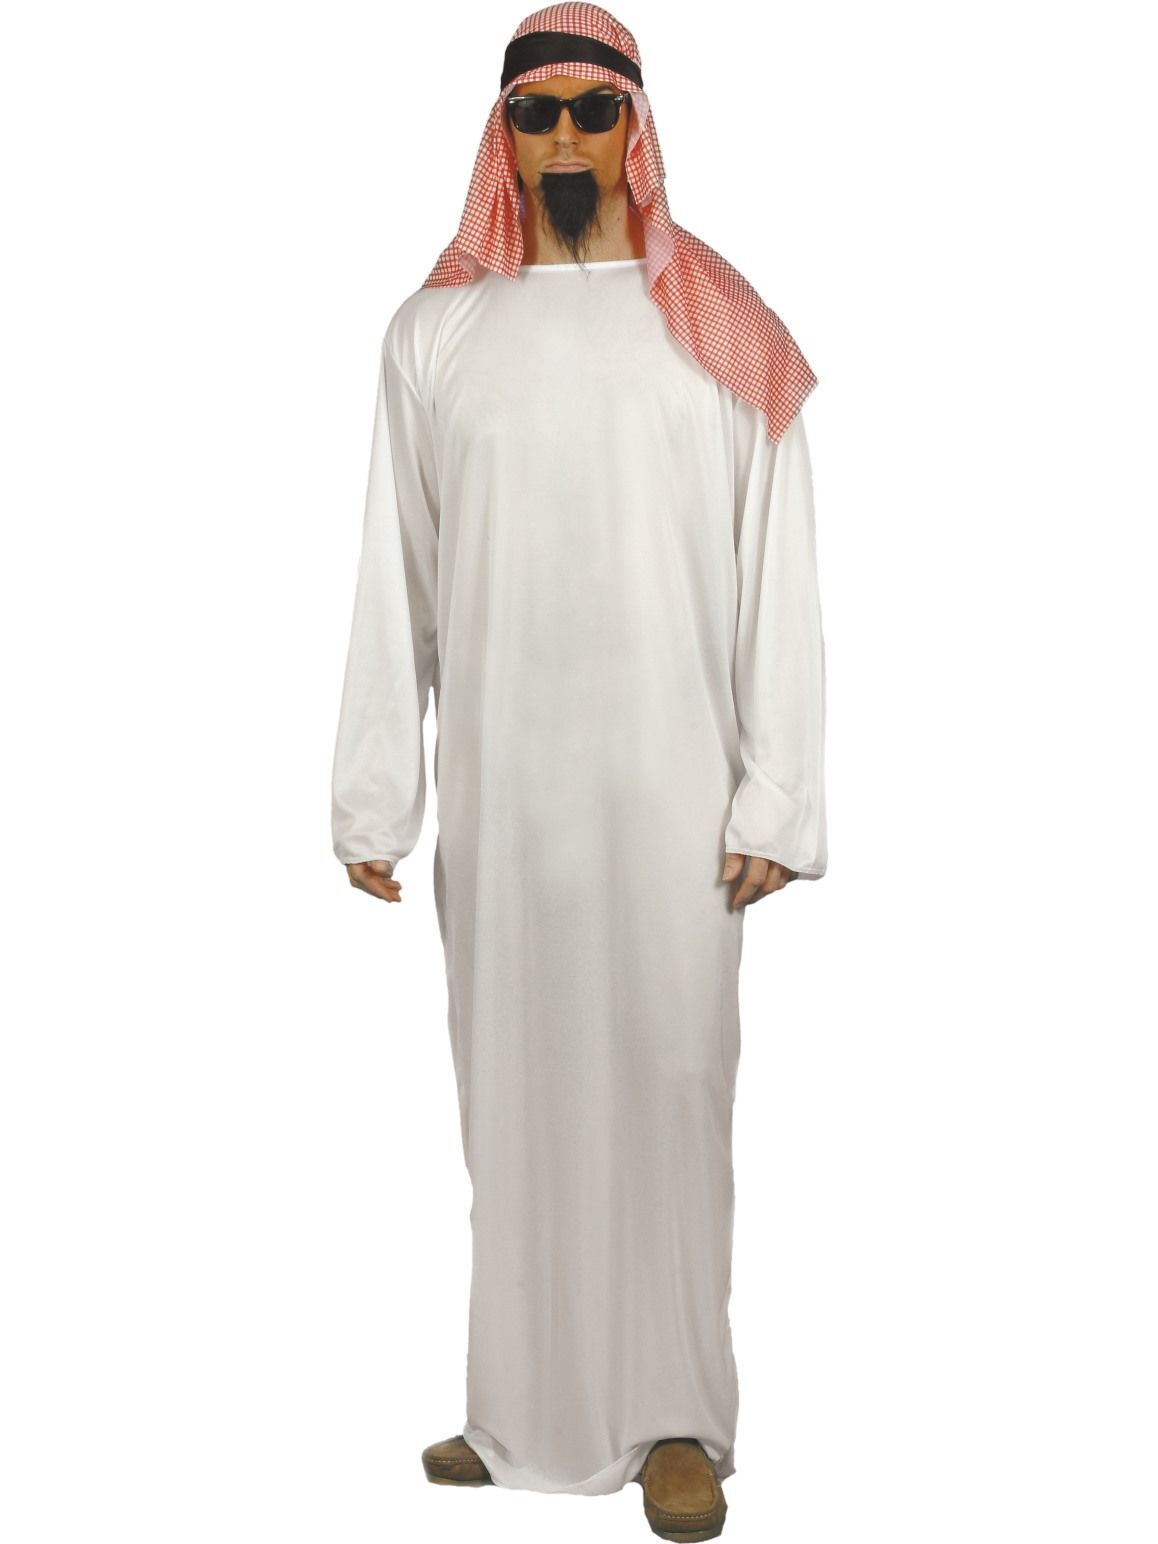 Sheikh Costume Perth - Arab Costume Perth